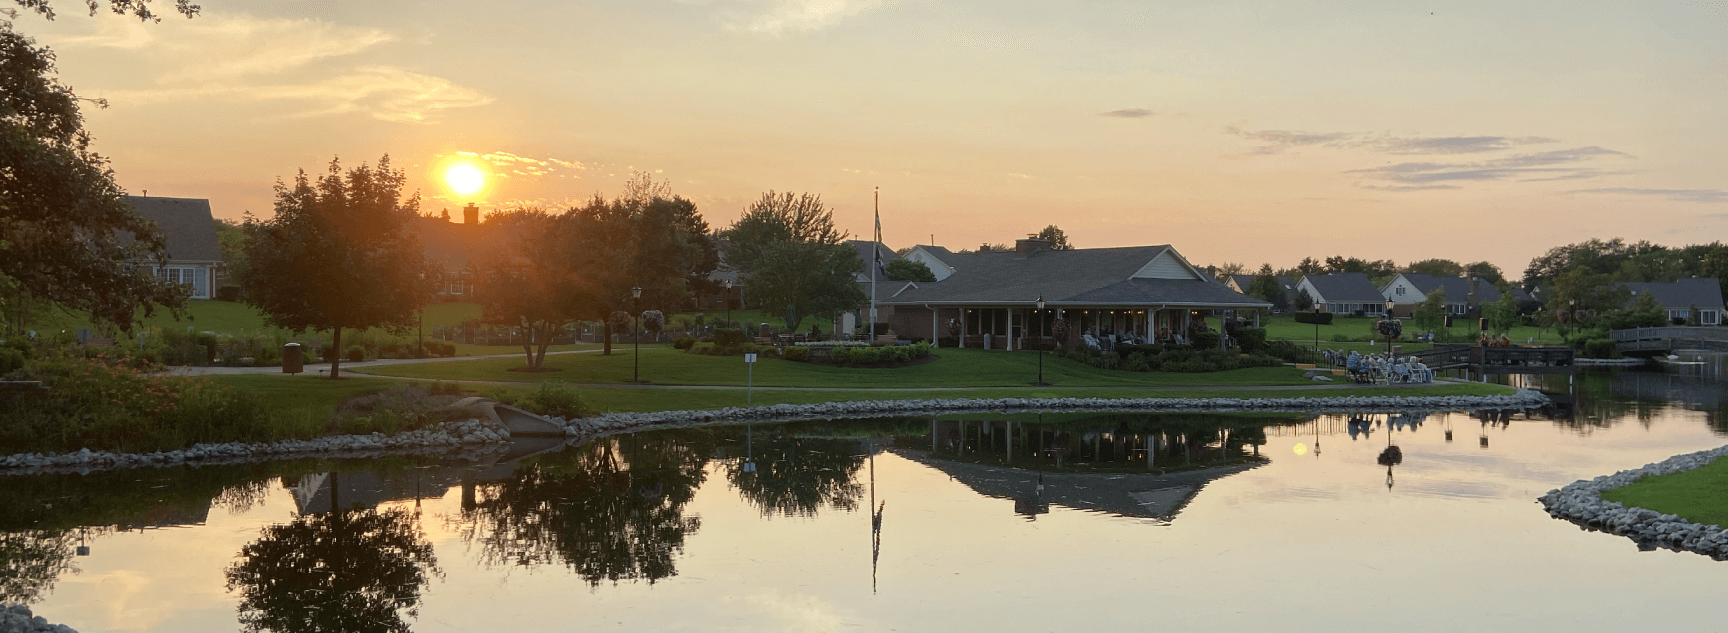 Community pond at sunset